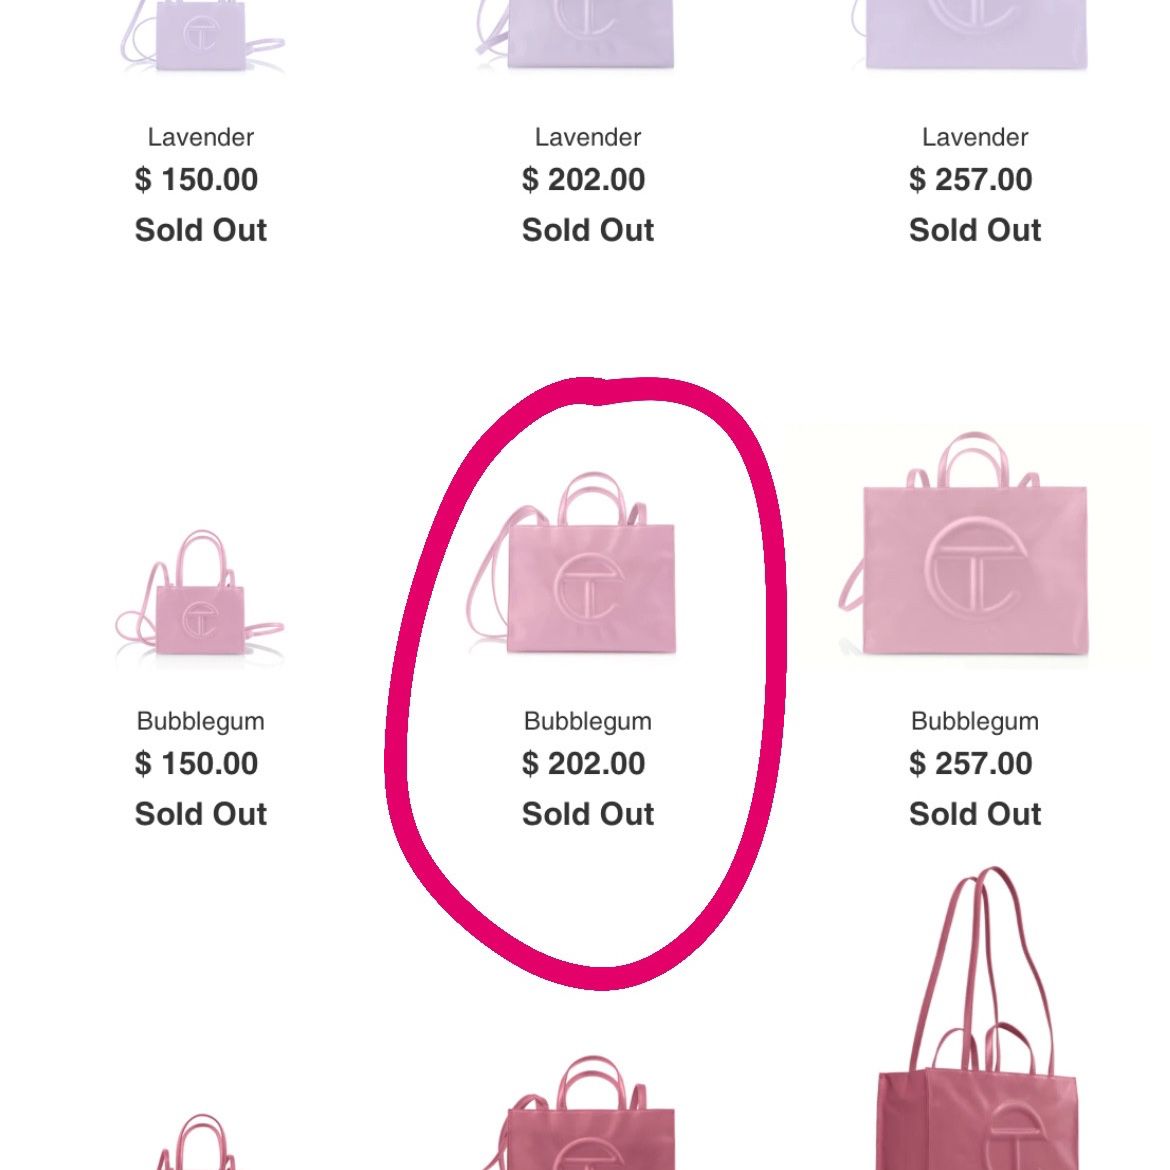 LARGE Bubblegum Pink Telfar Bag for Sale in Chicago, IL - OfferUp